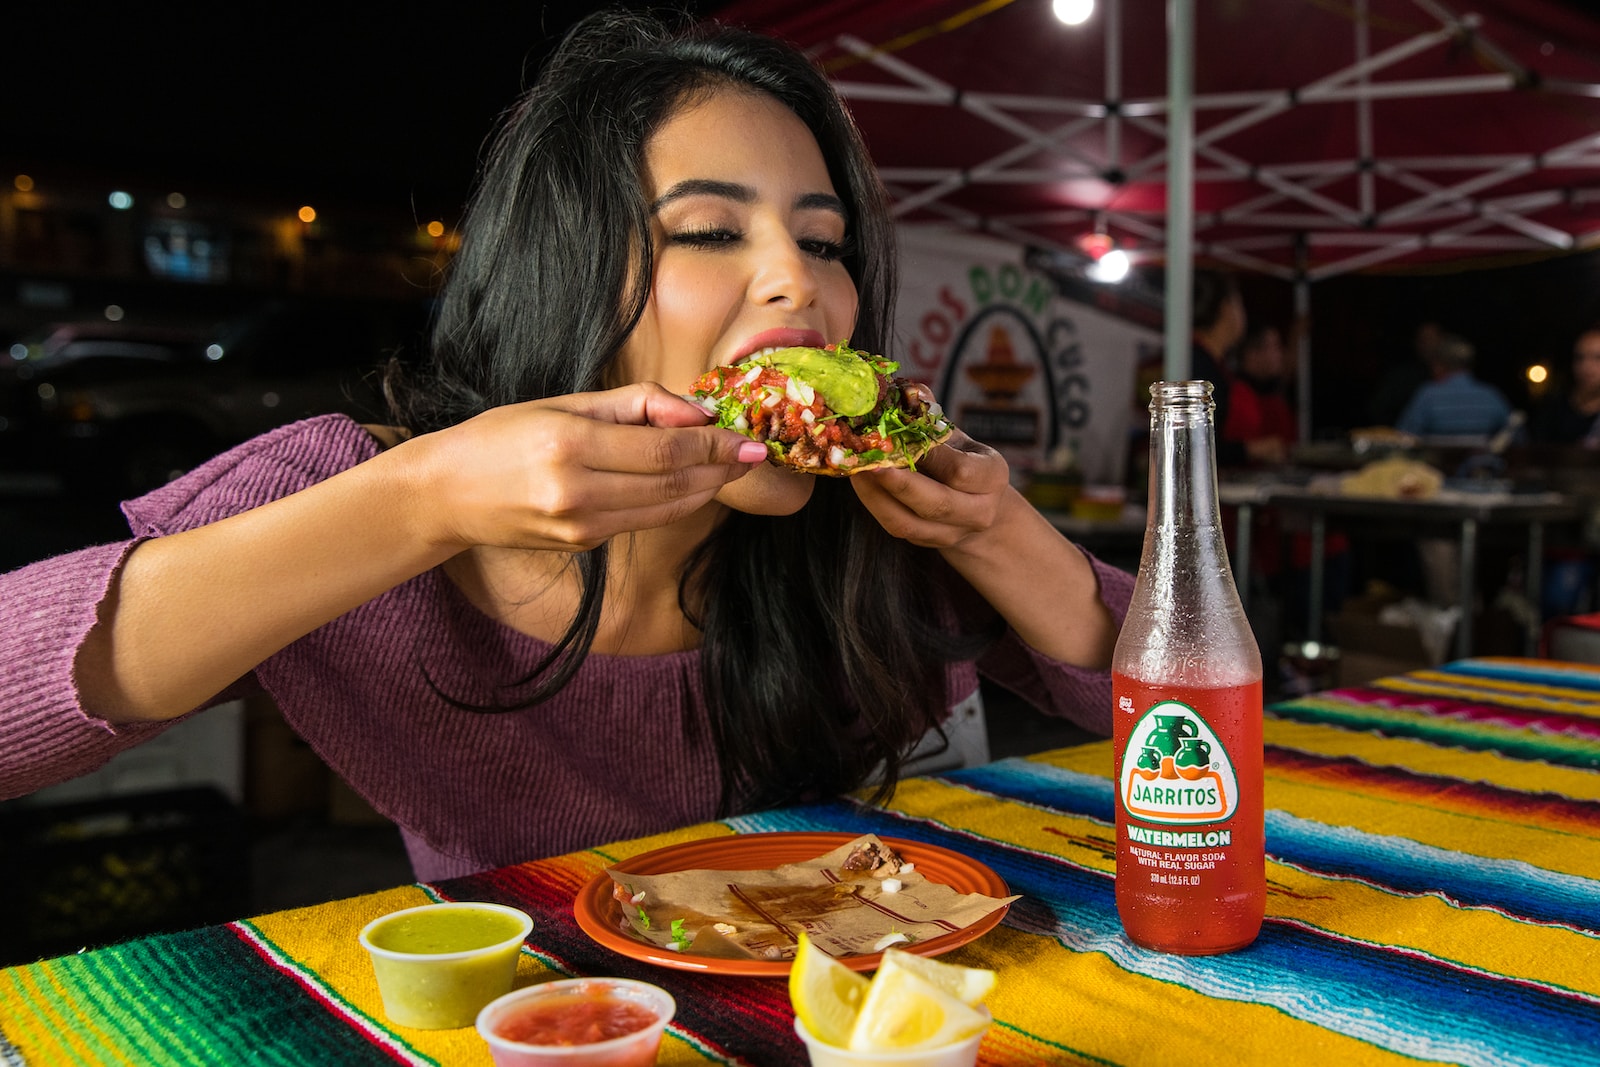 Food advertising and eating behavior girl eating